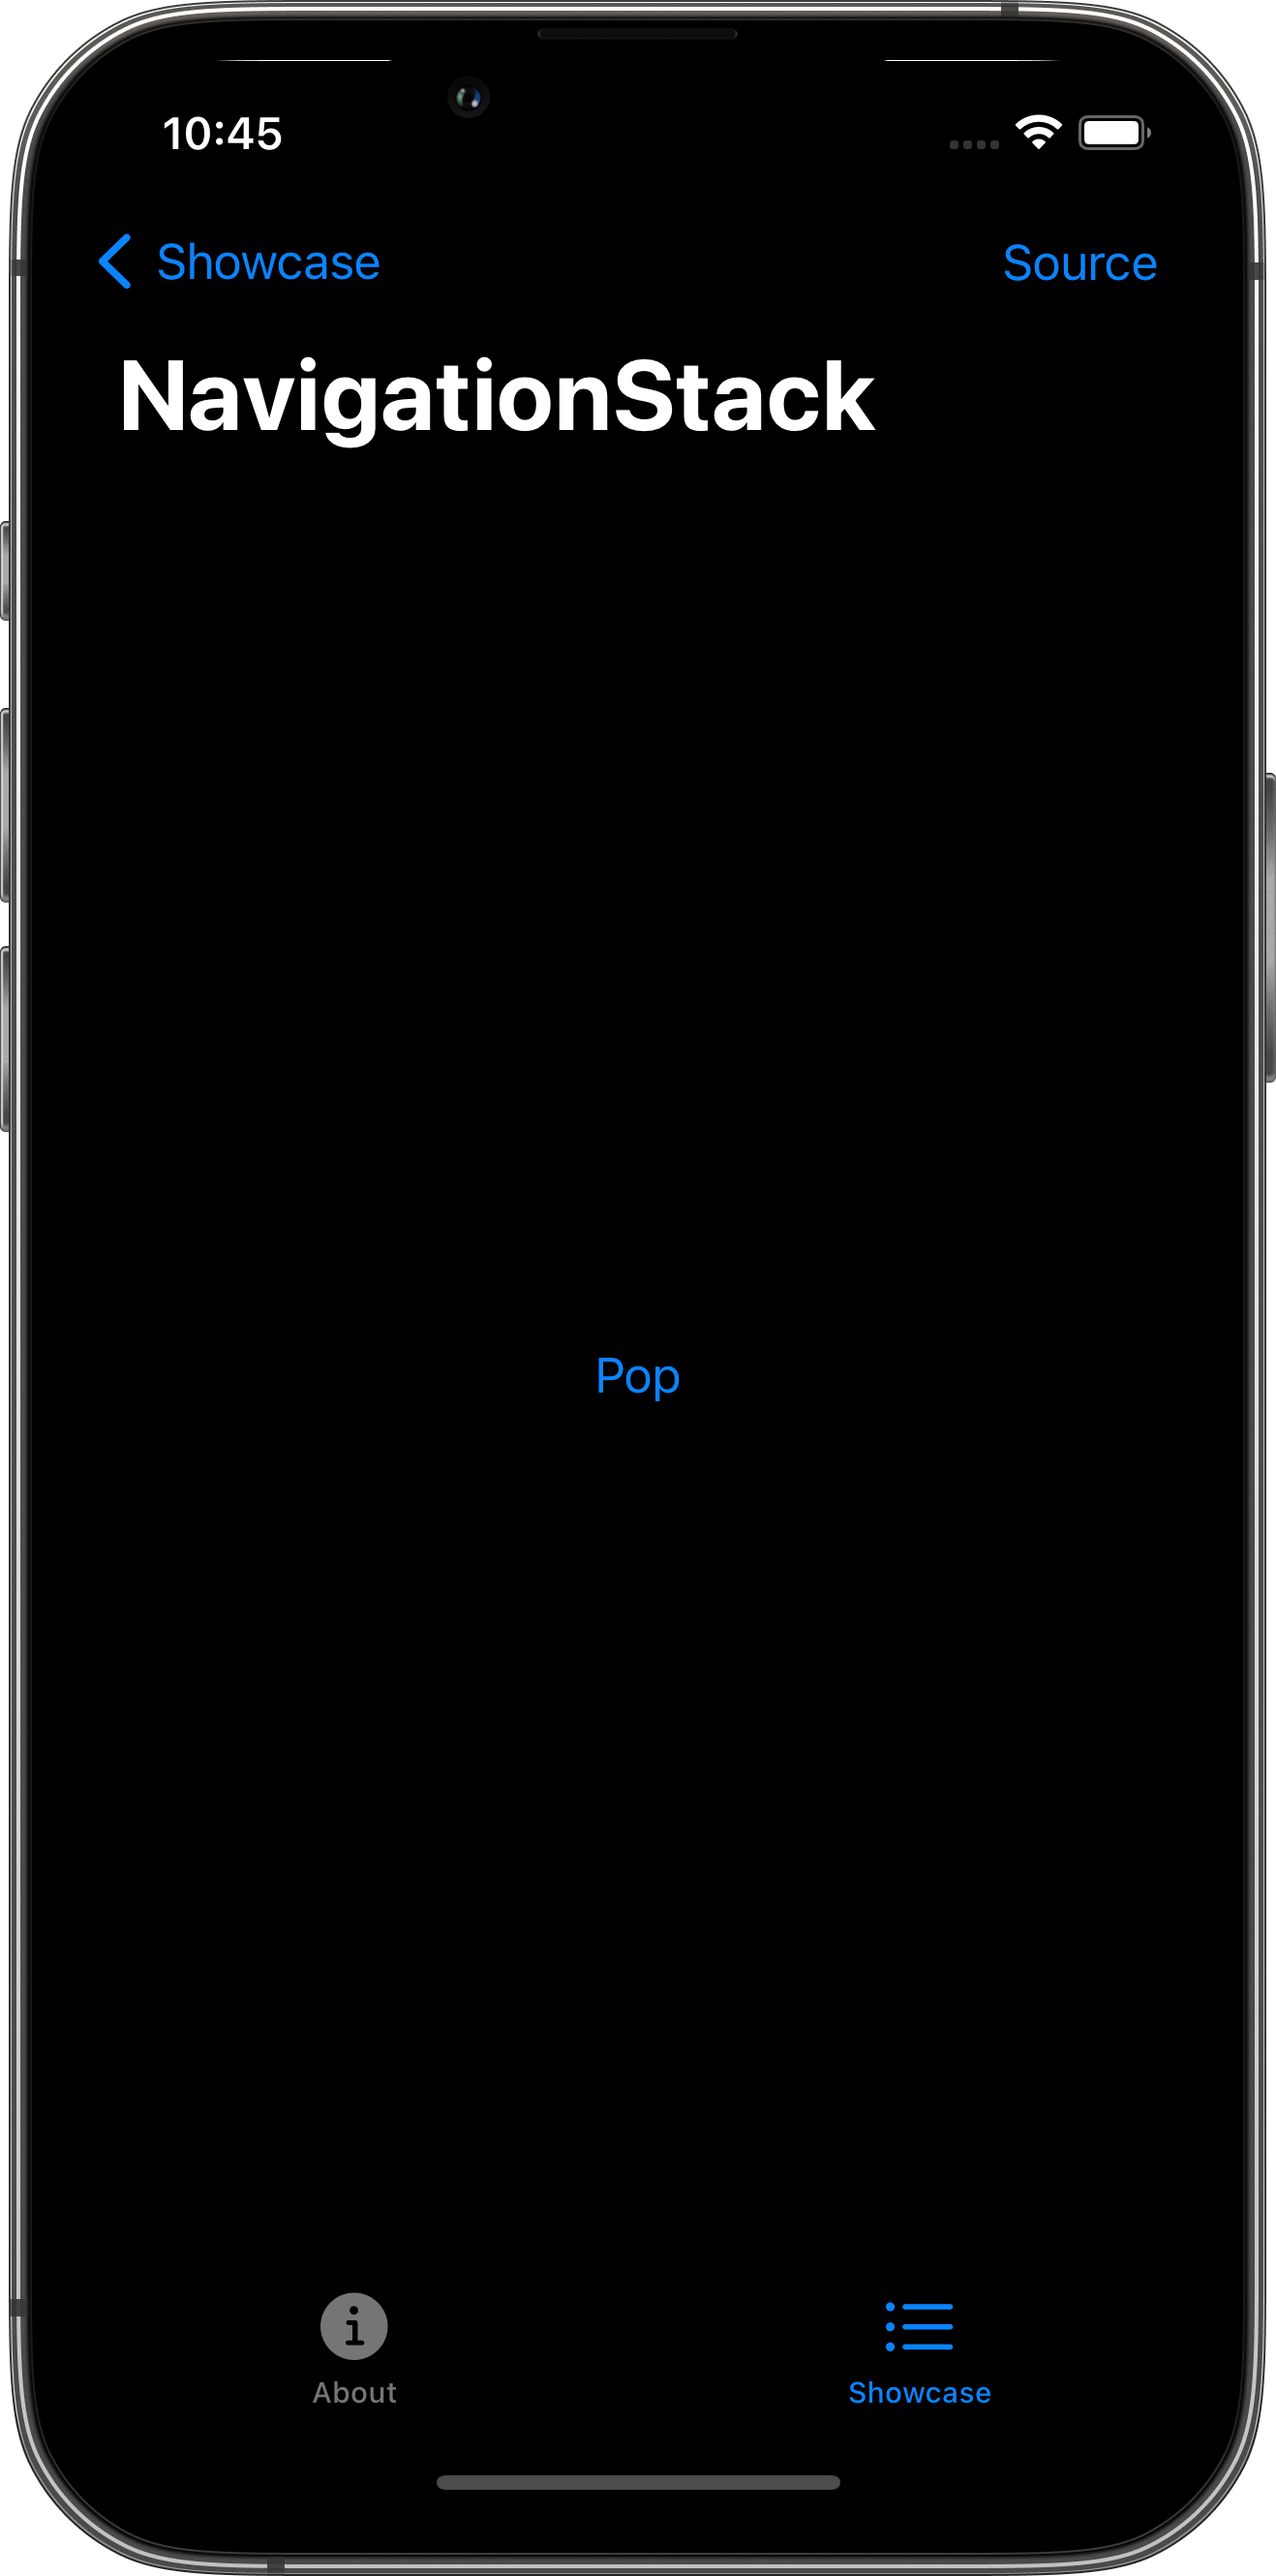 iPhone screenshot for NavigationStack component (dark mode)